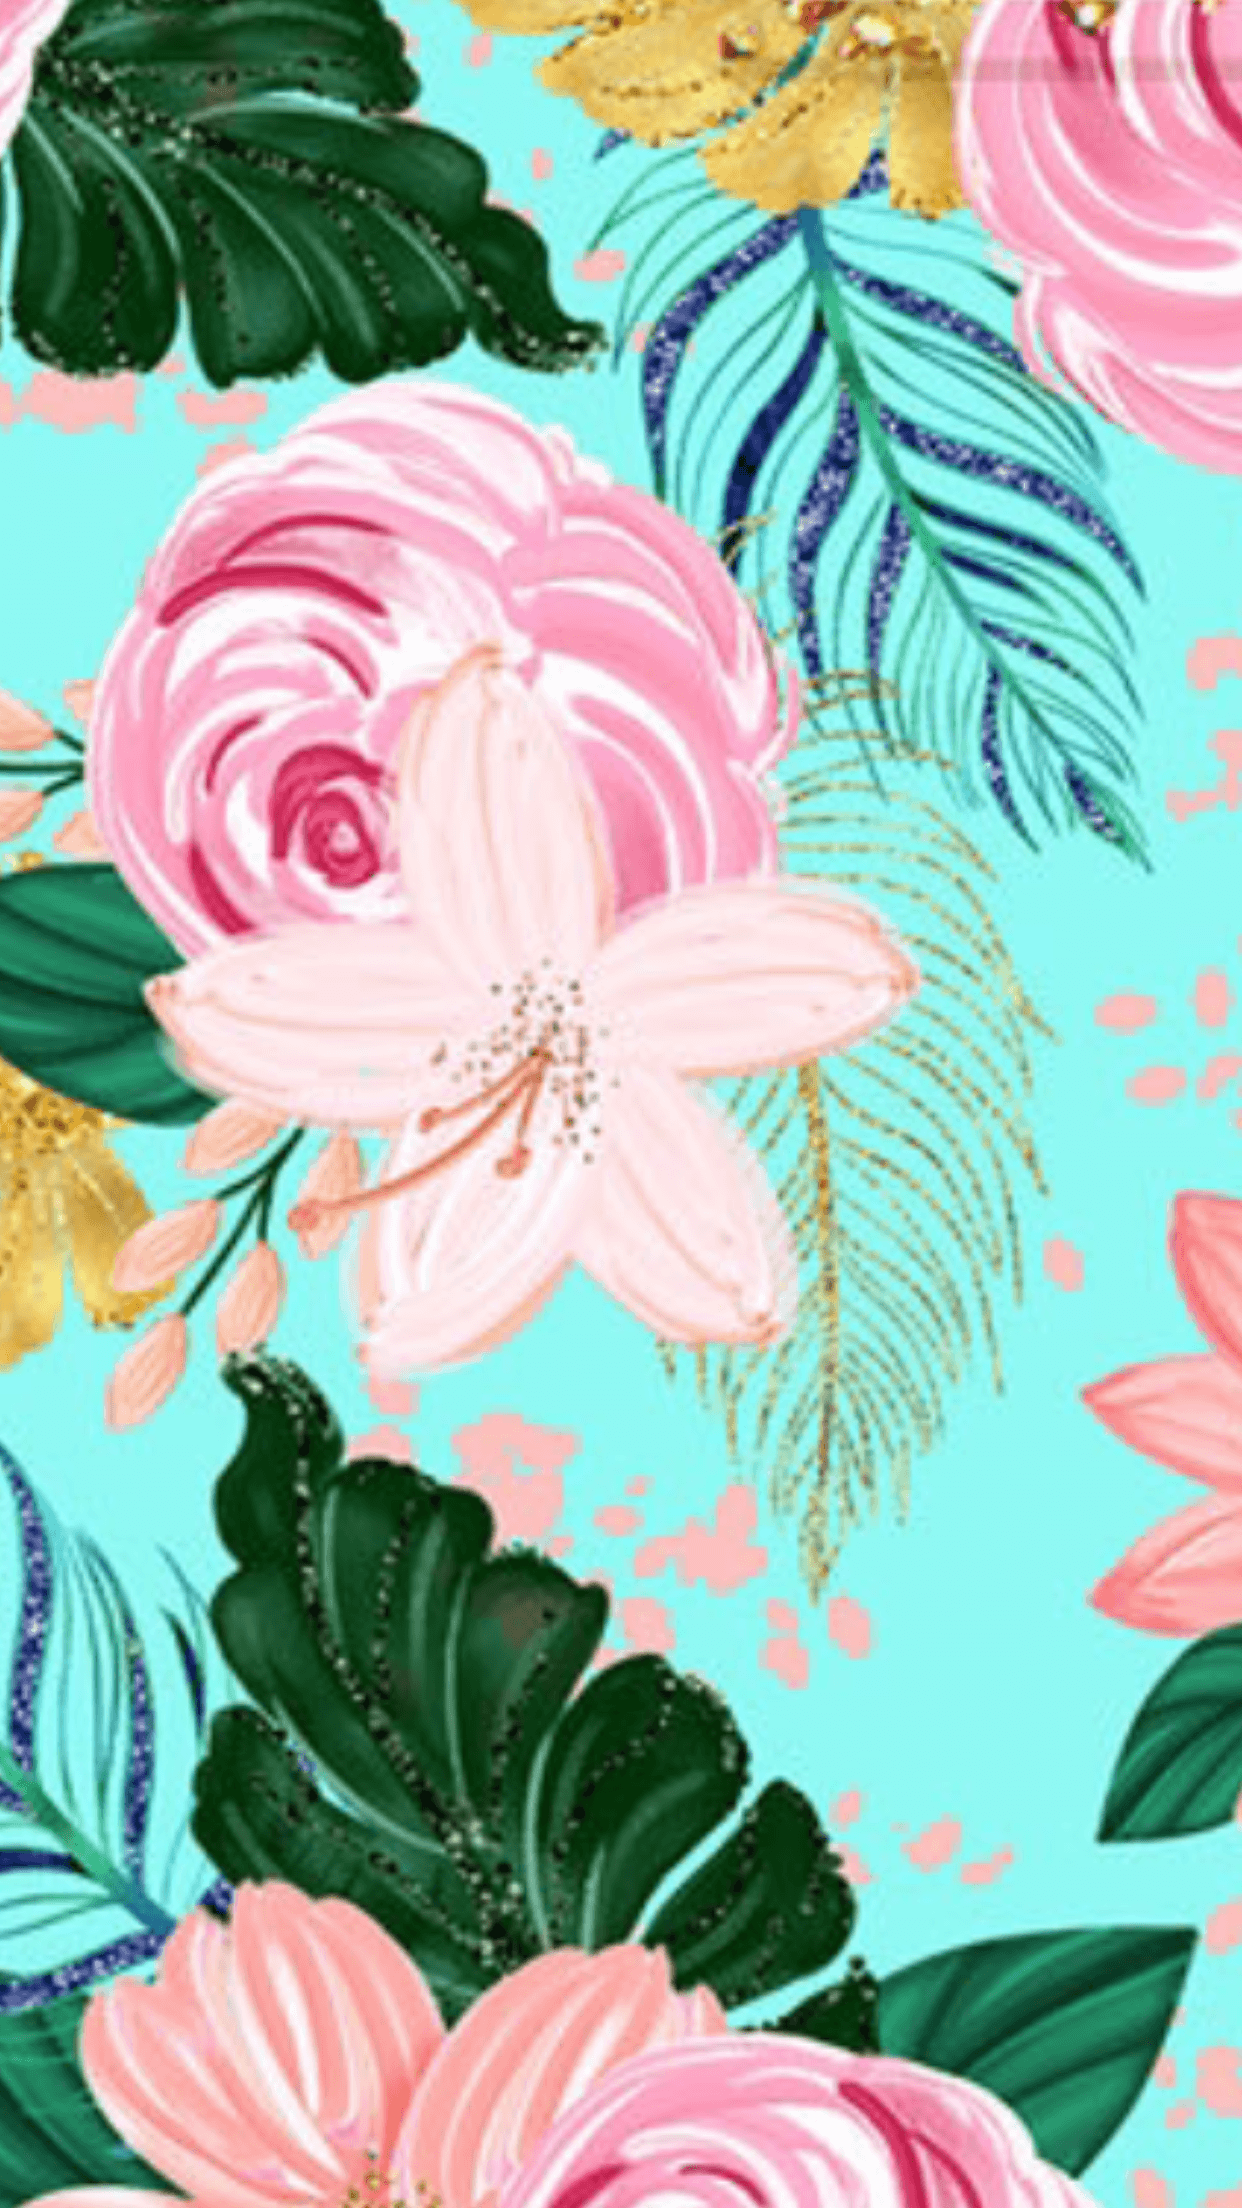 Flower iPhone Wallpaper, Pretty Patterns, Gaia, Aesthetics